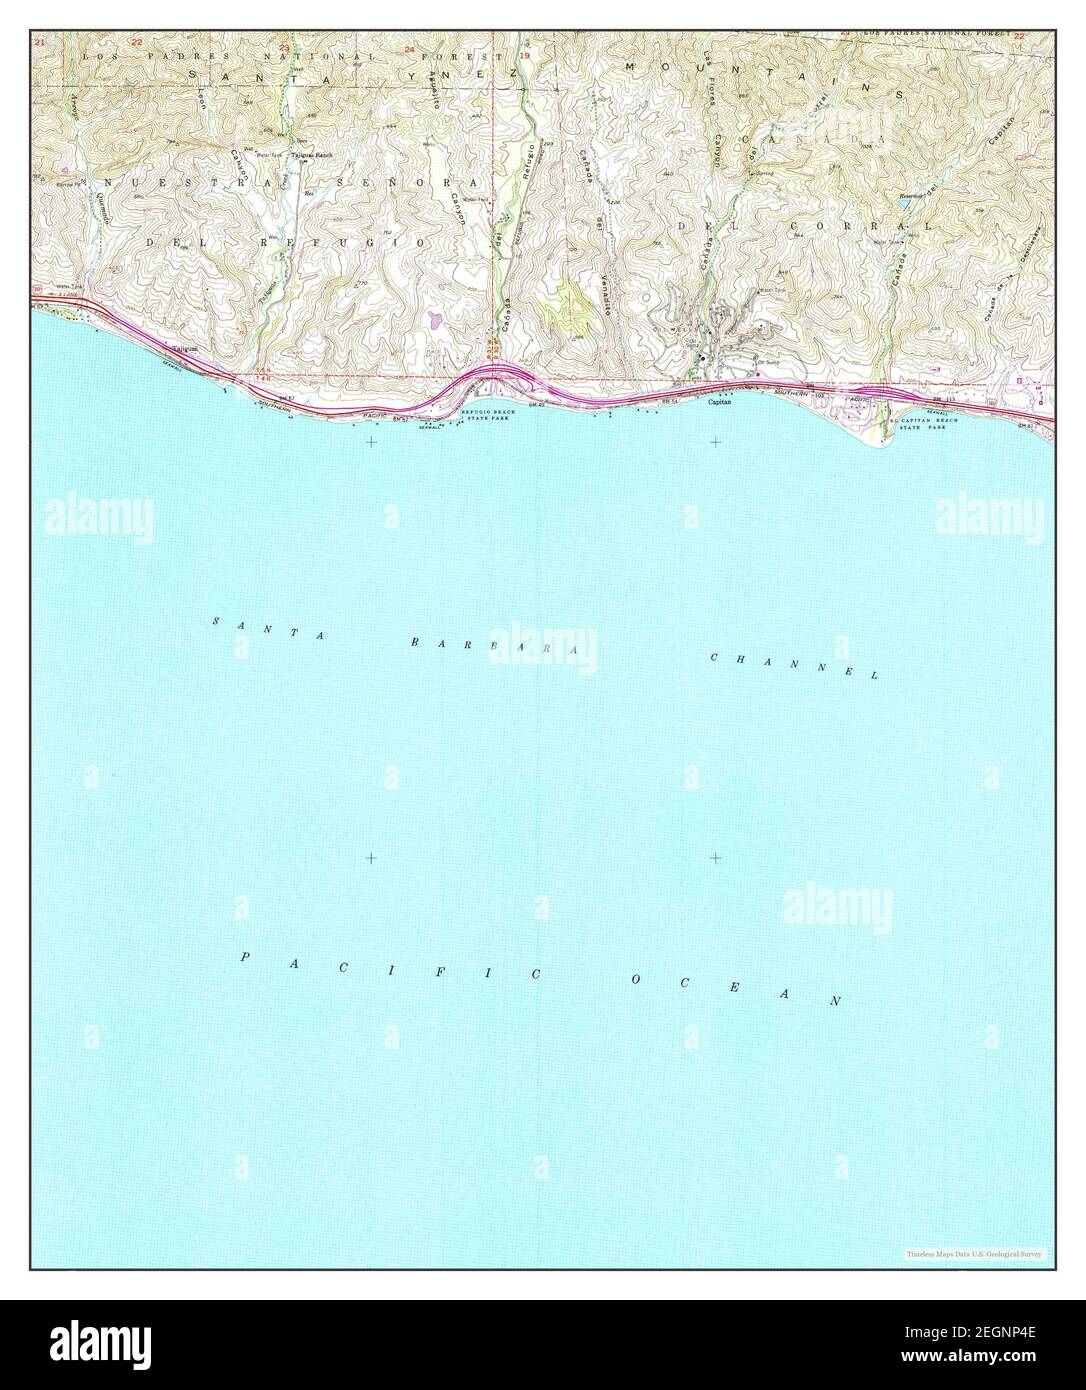 Tajiguas, California, map 1953, 1:24000, United States of America by Timeless Maps, data U.S. Geological Survey Stock Photo